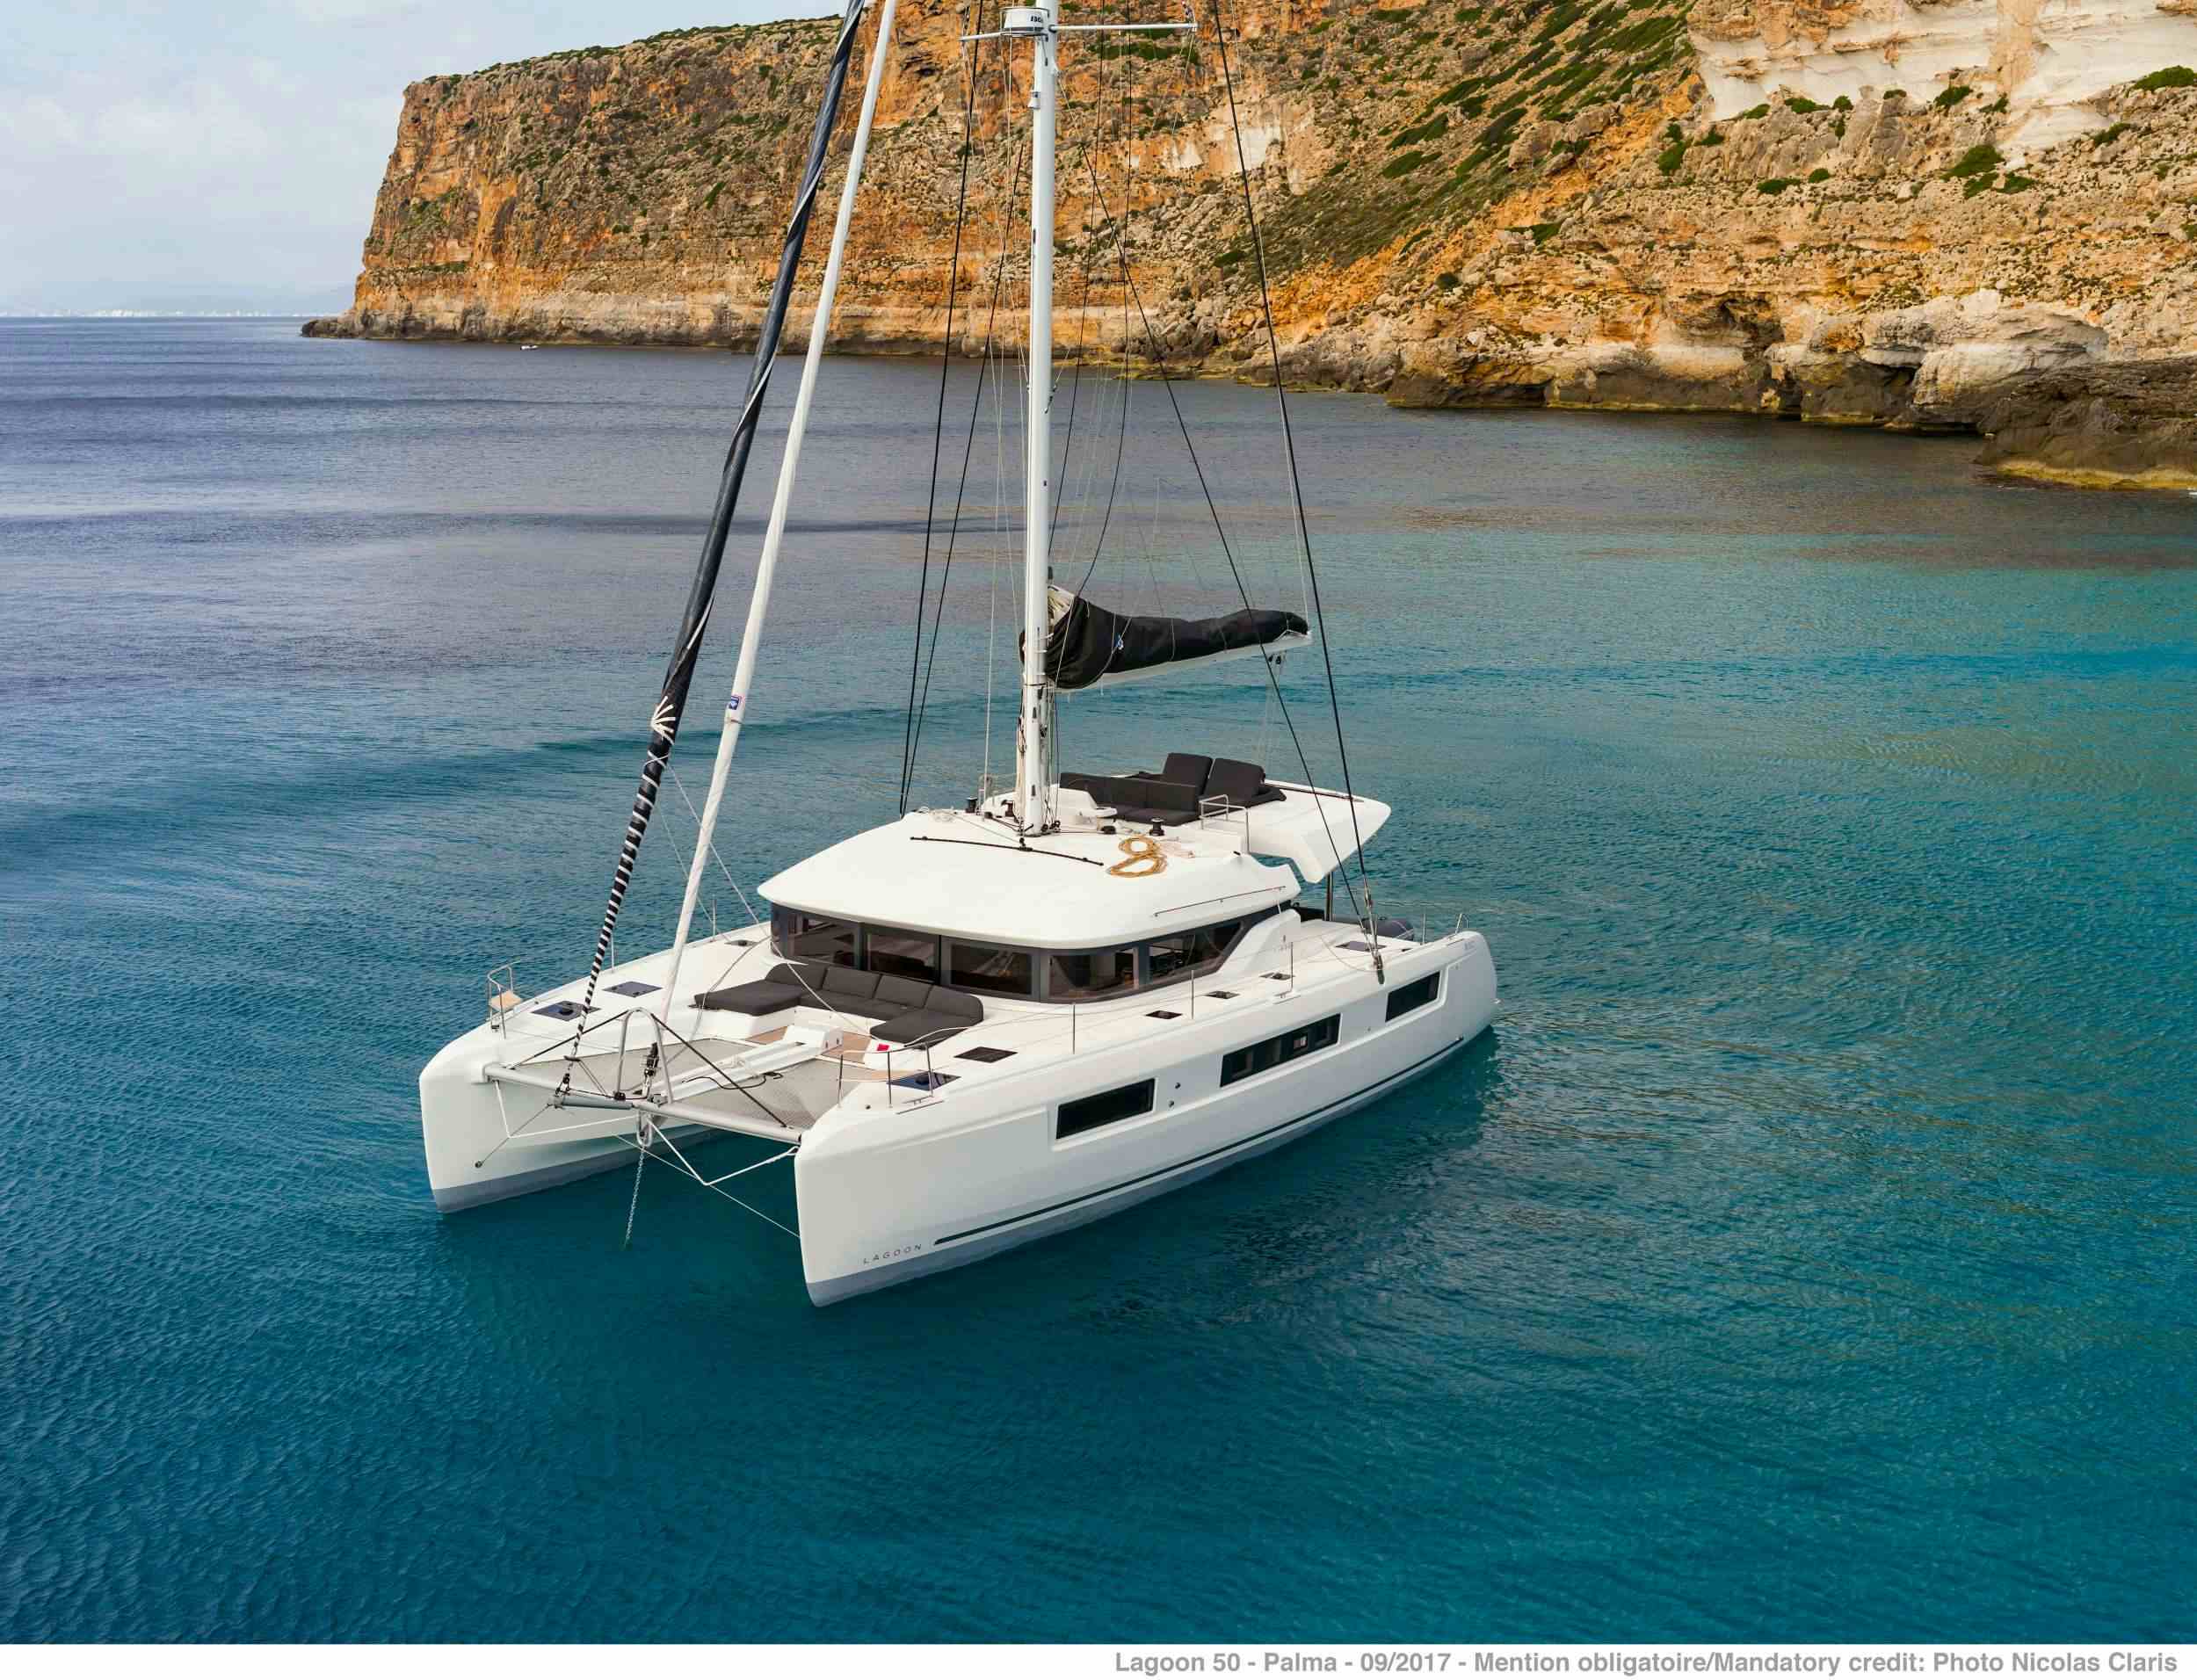 ONEIDA 2 - Yacht Charter Skiathos & Boat hire in Greece 1